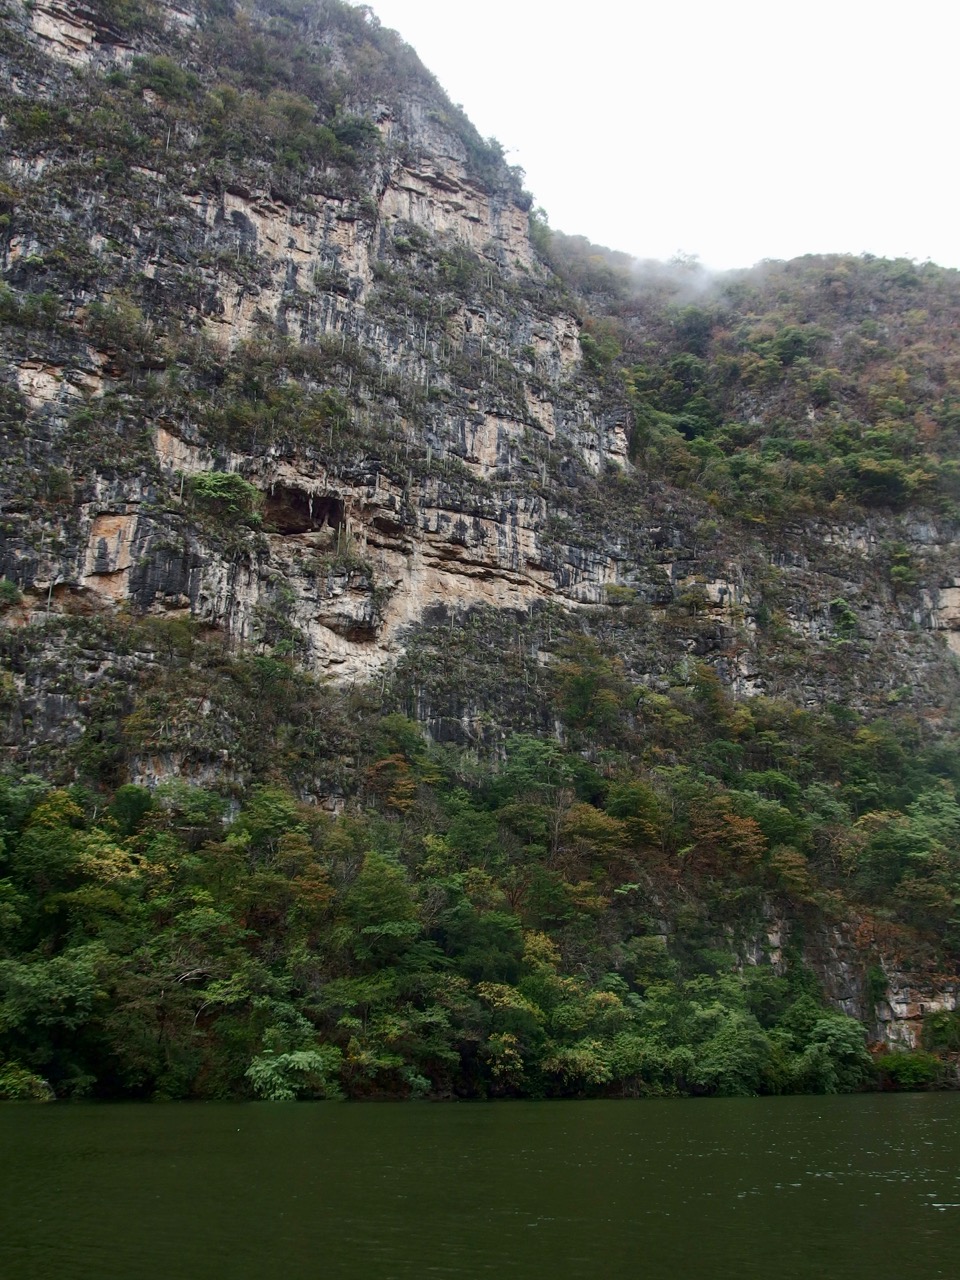 Sumidero Canyon, Chiapas, Mexico